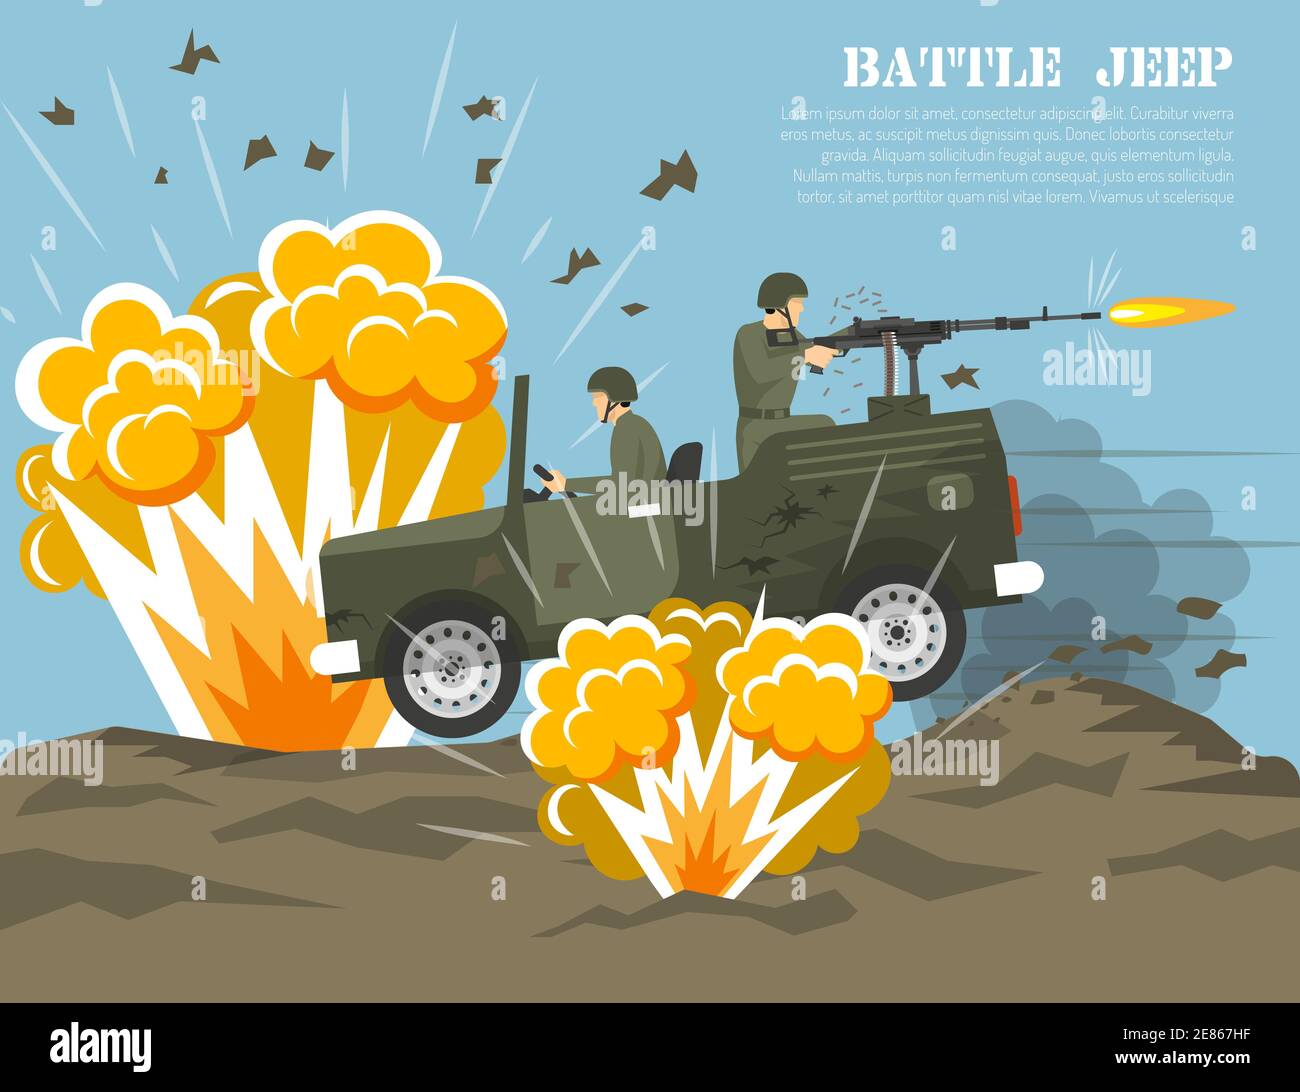 Legendäre US-Armee Allrad-Antrieb Jeep im Kampf Umwelt flach Militär Poster Print abstrakten Vektor Illustration Stock Vektor